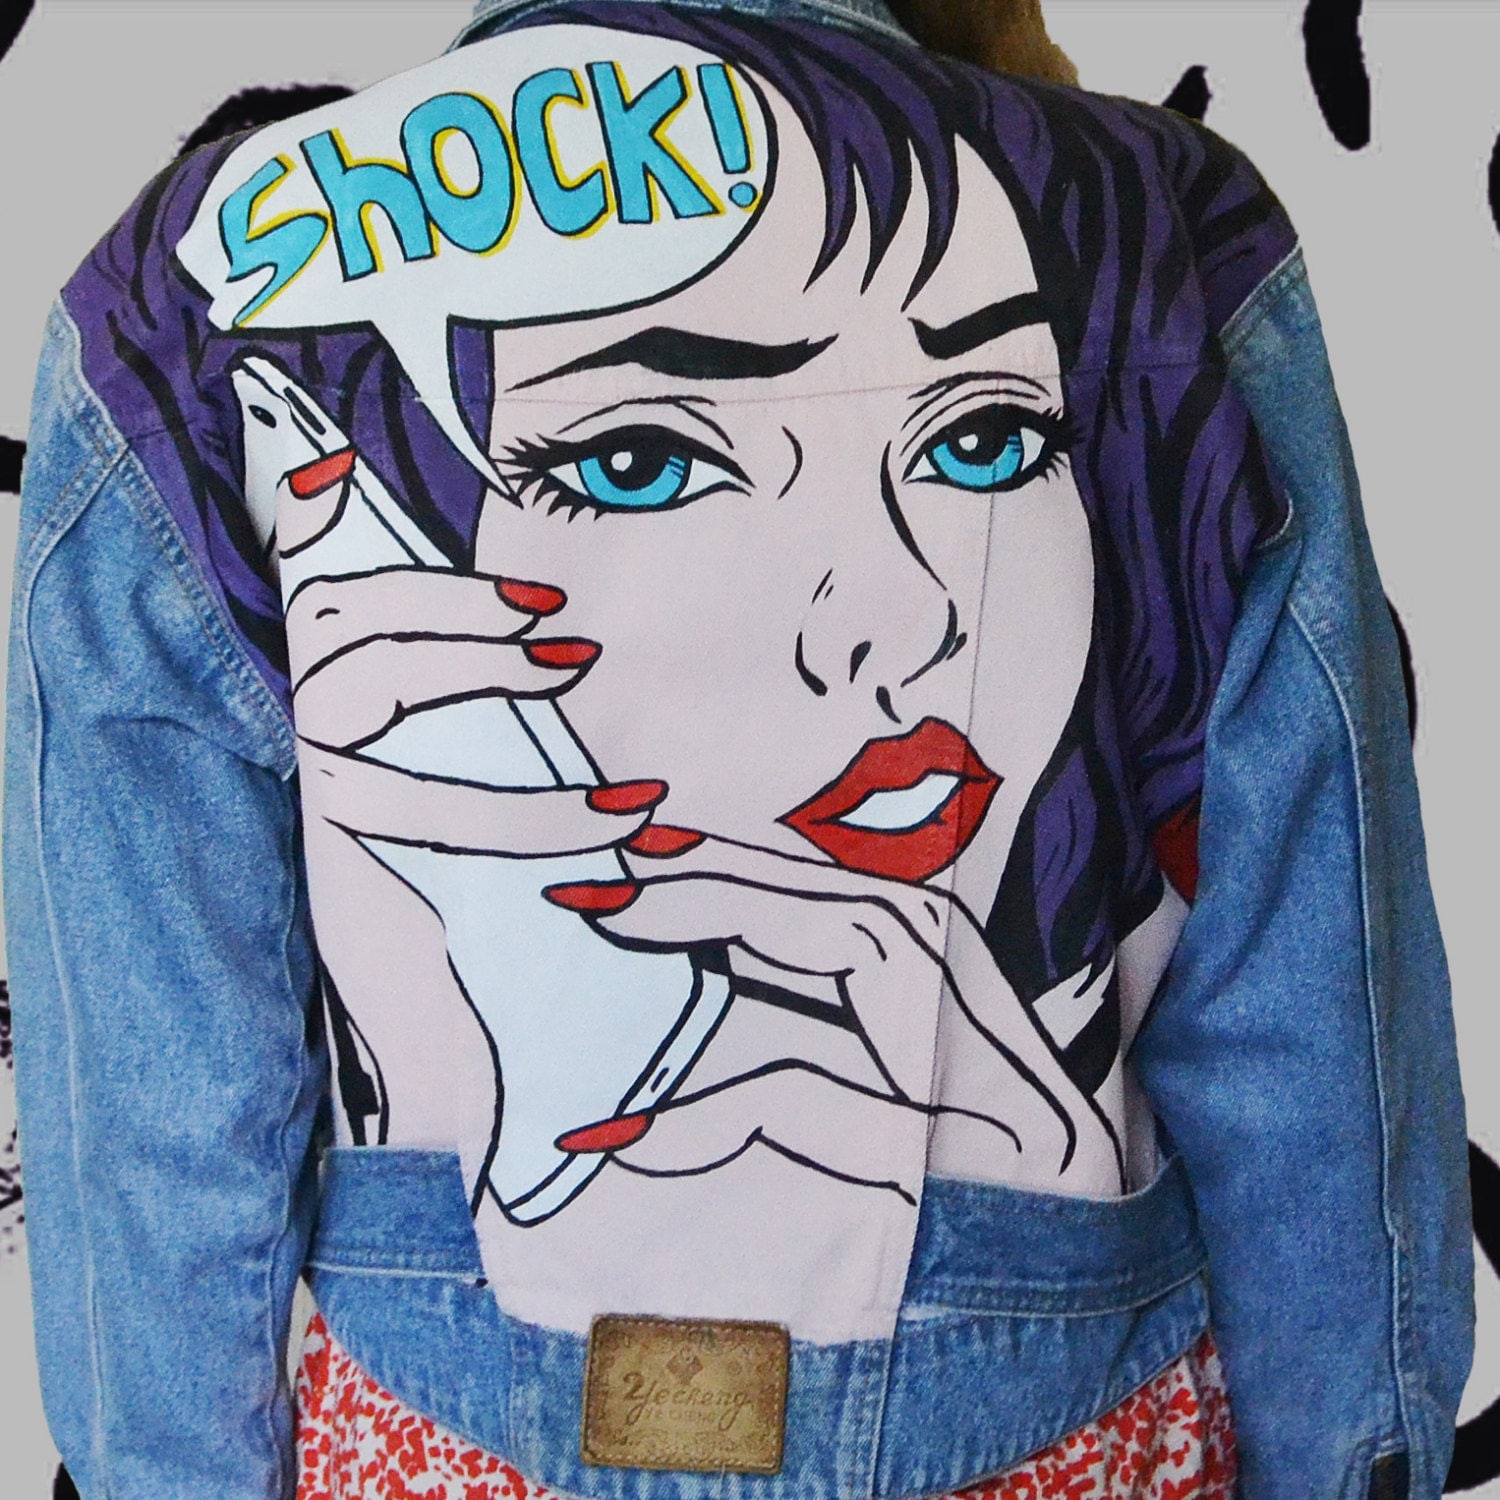 Pop-art hand painted denim jacket.